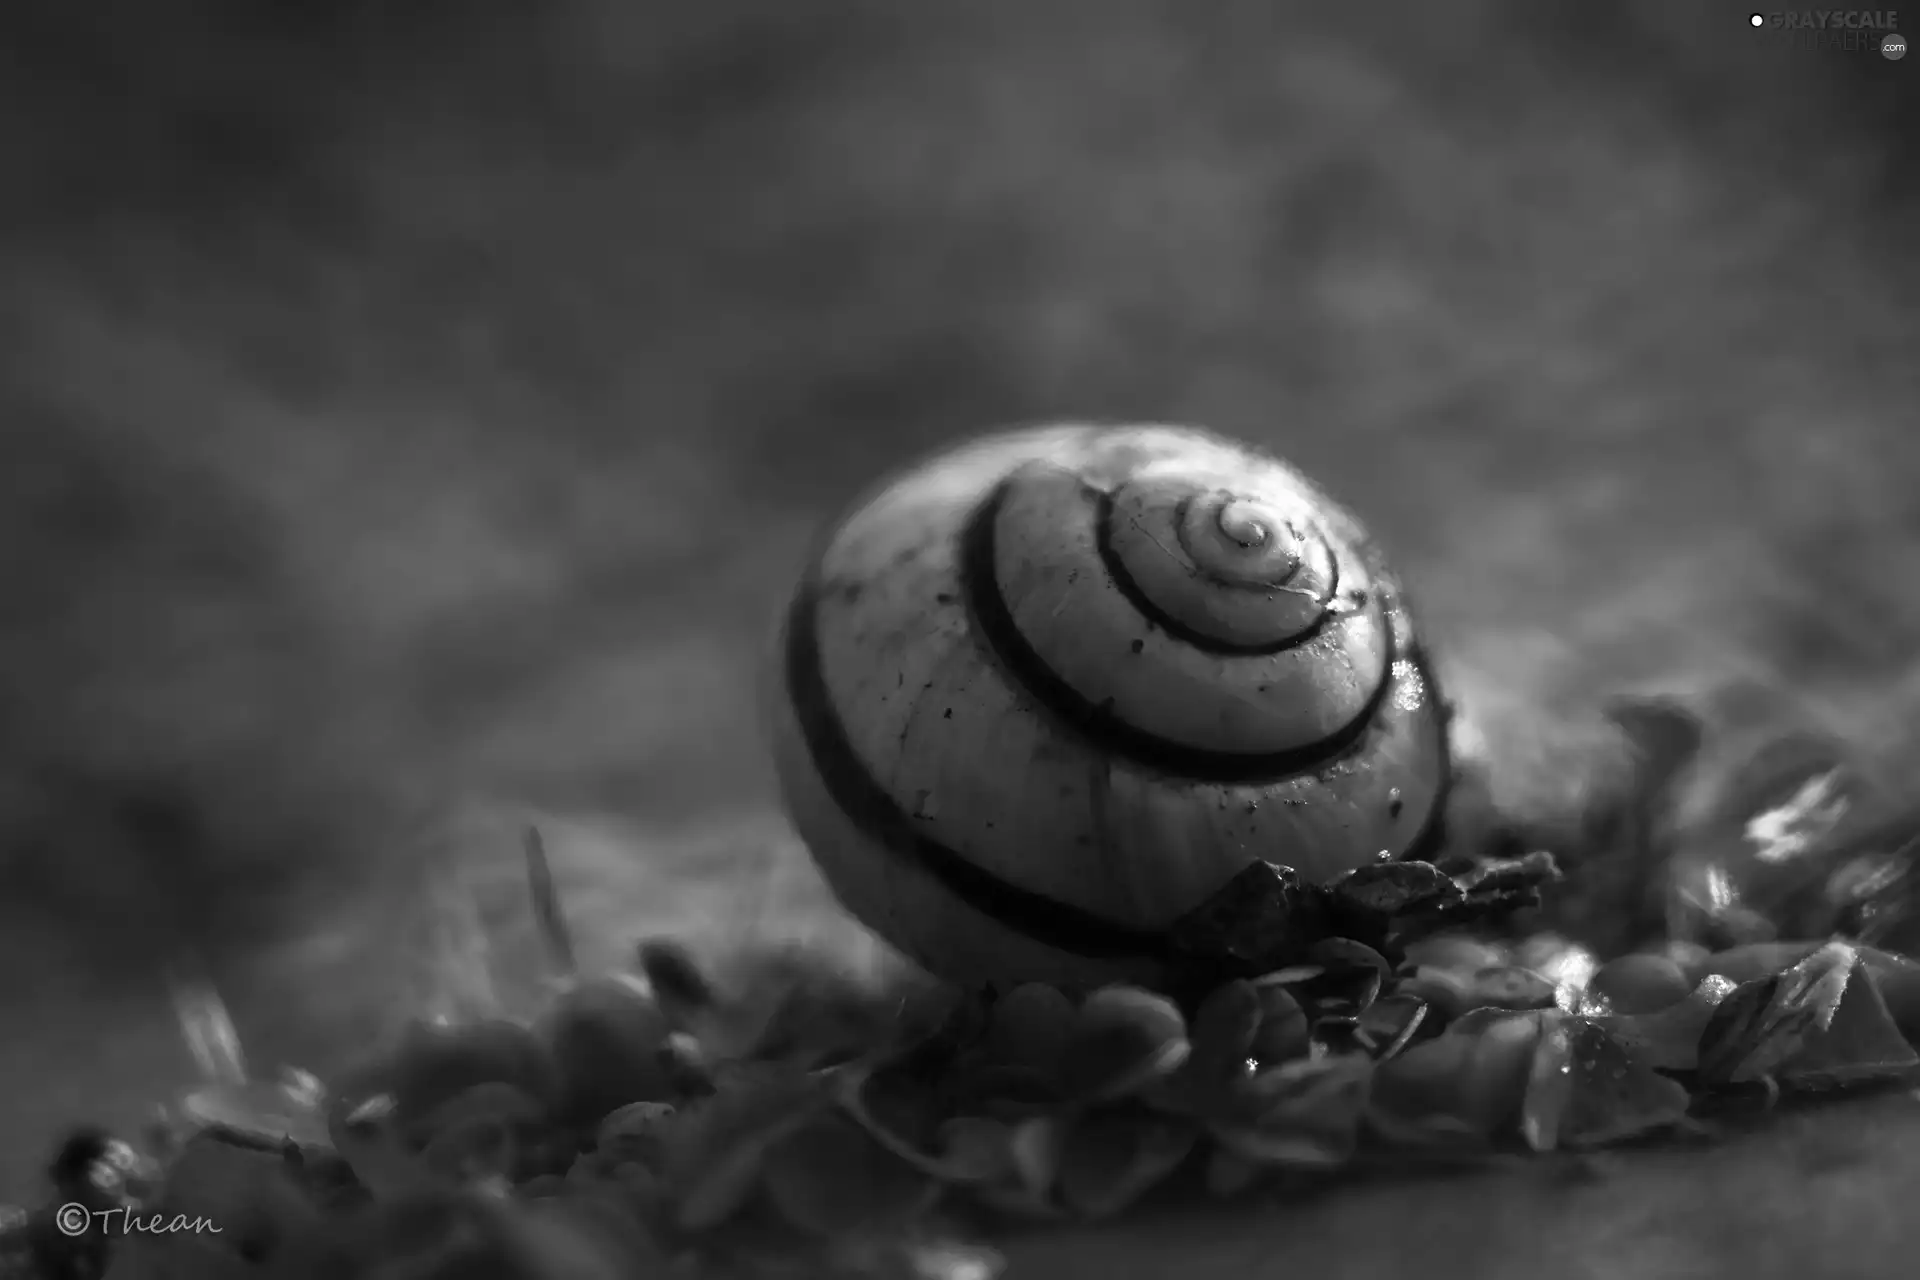 plants, shell, snail